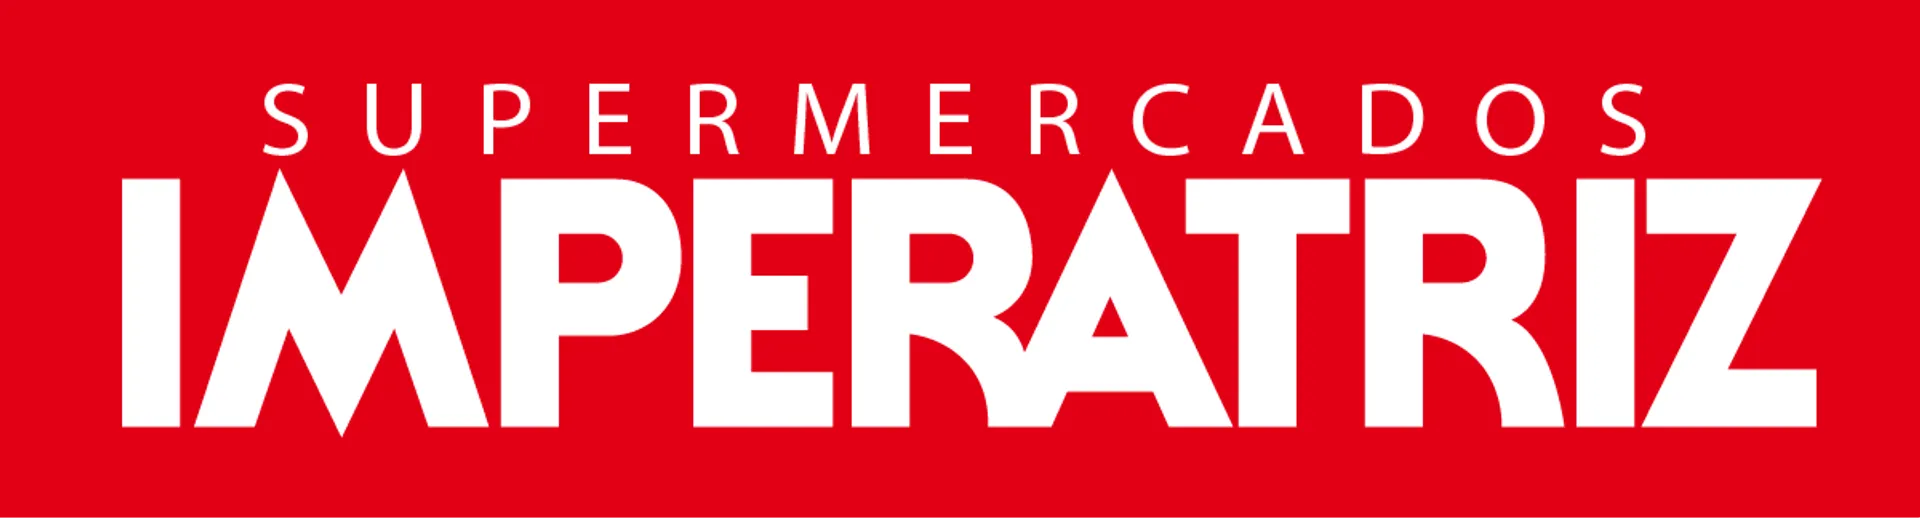 SUPERMERCADOS IMPERATRIZ logo